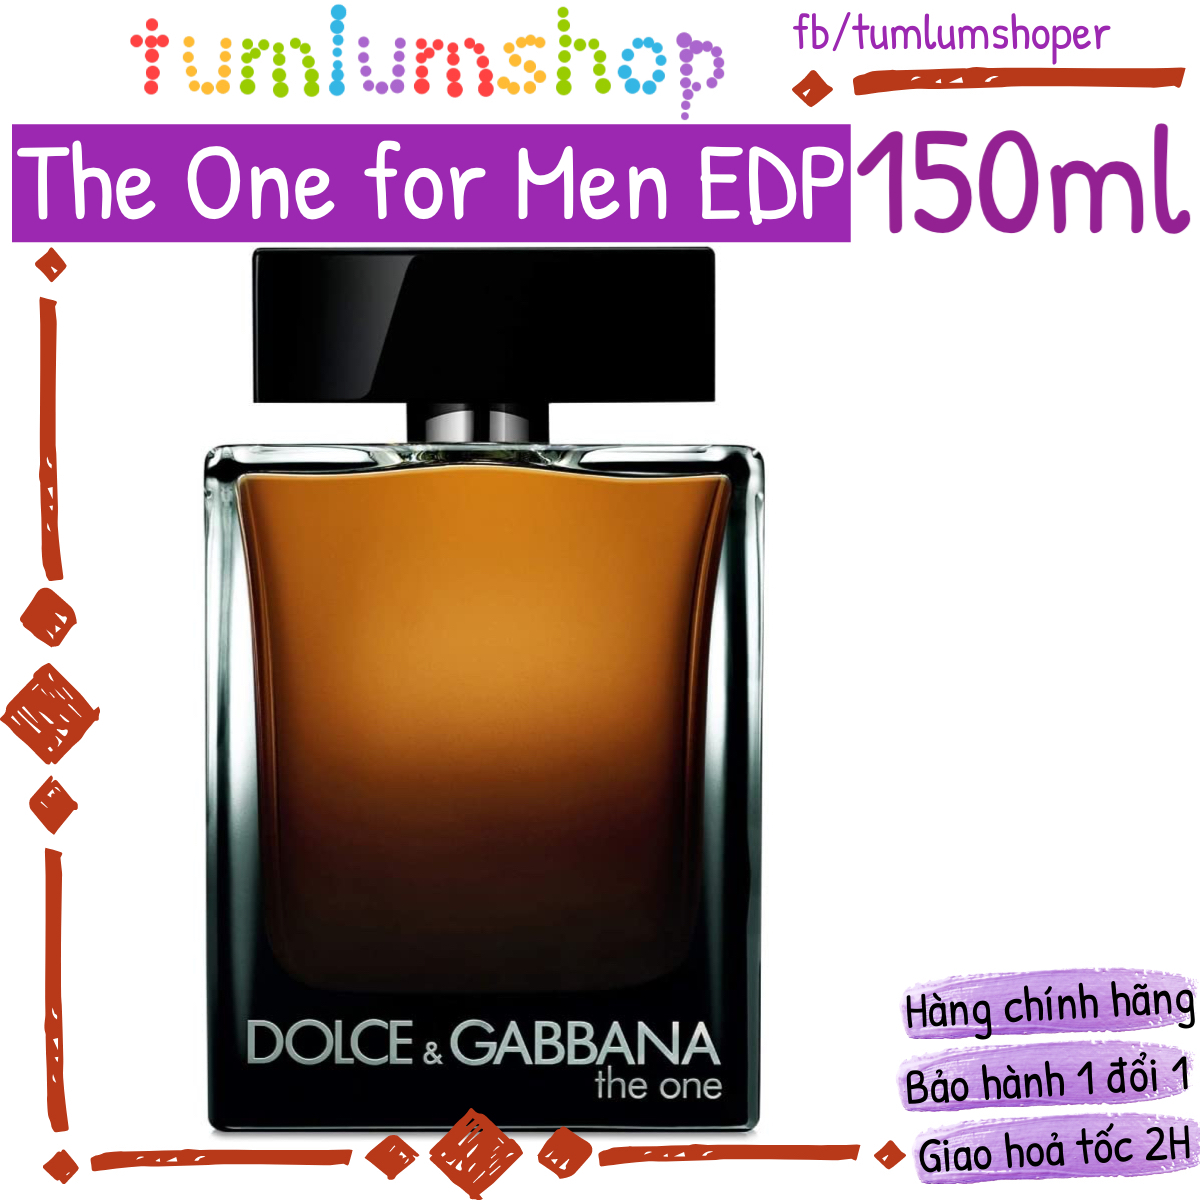 Nước hoa The One for Men EDP by Dolce Gabbana loại 150ml